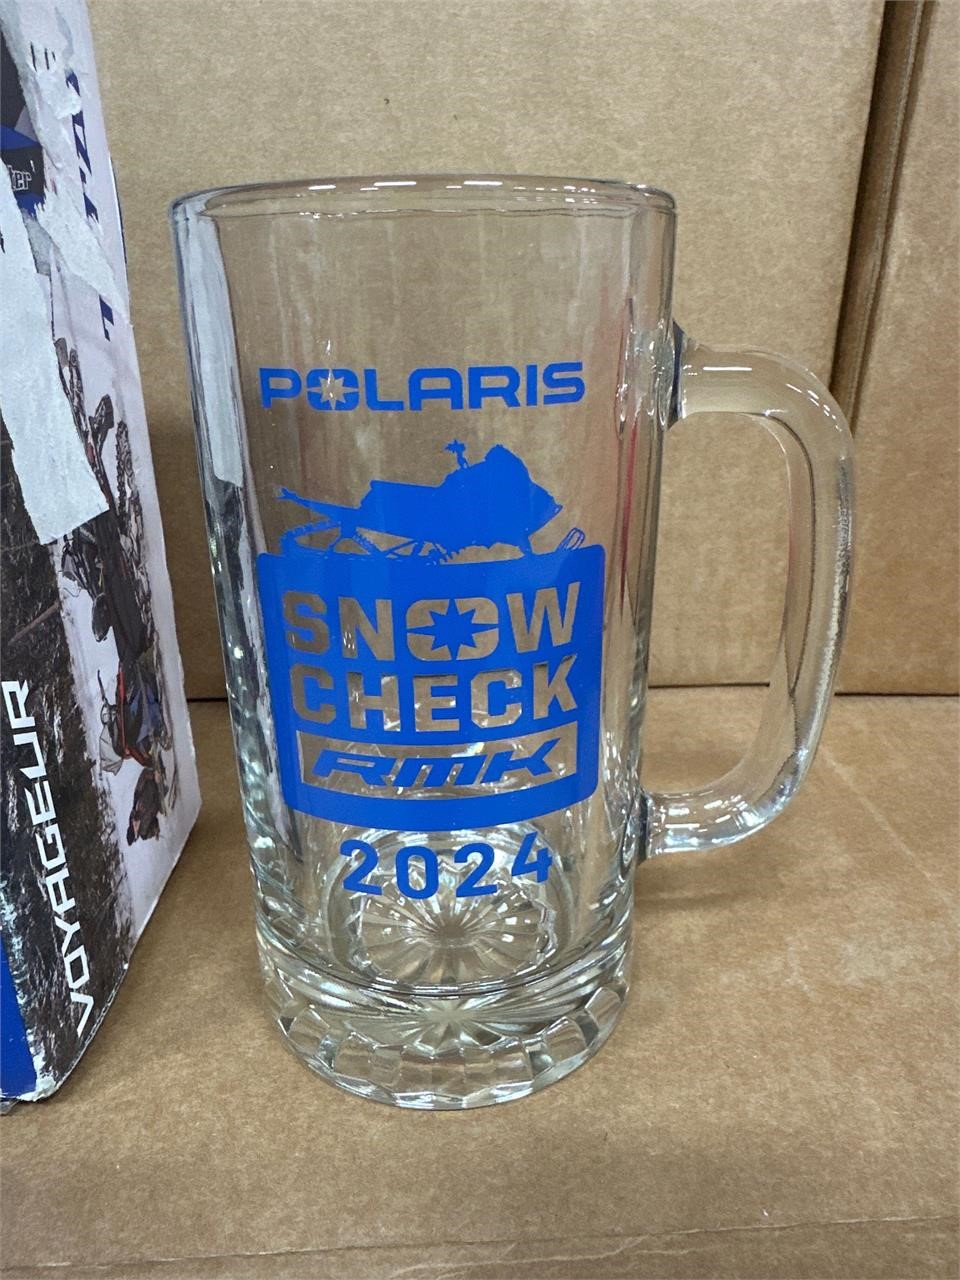 Polaris Snow Check RMK 2024 Beer Glass